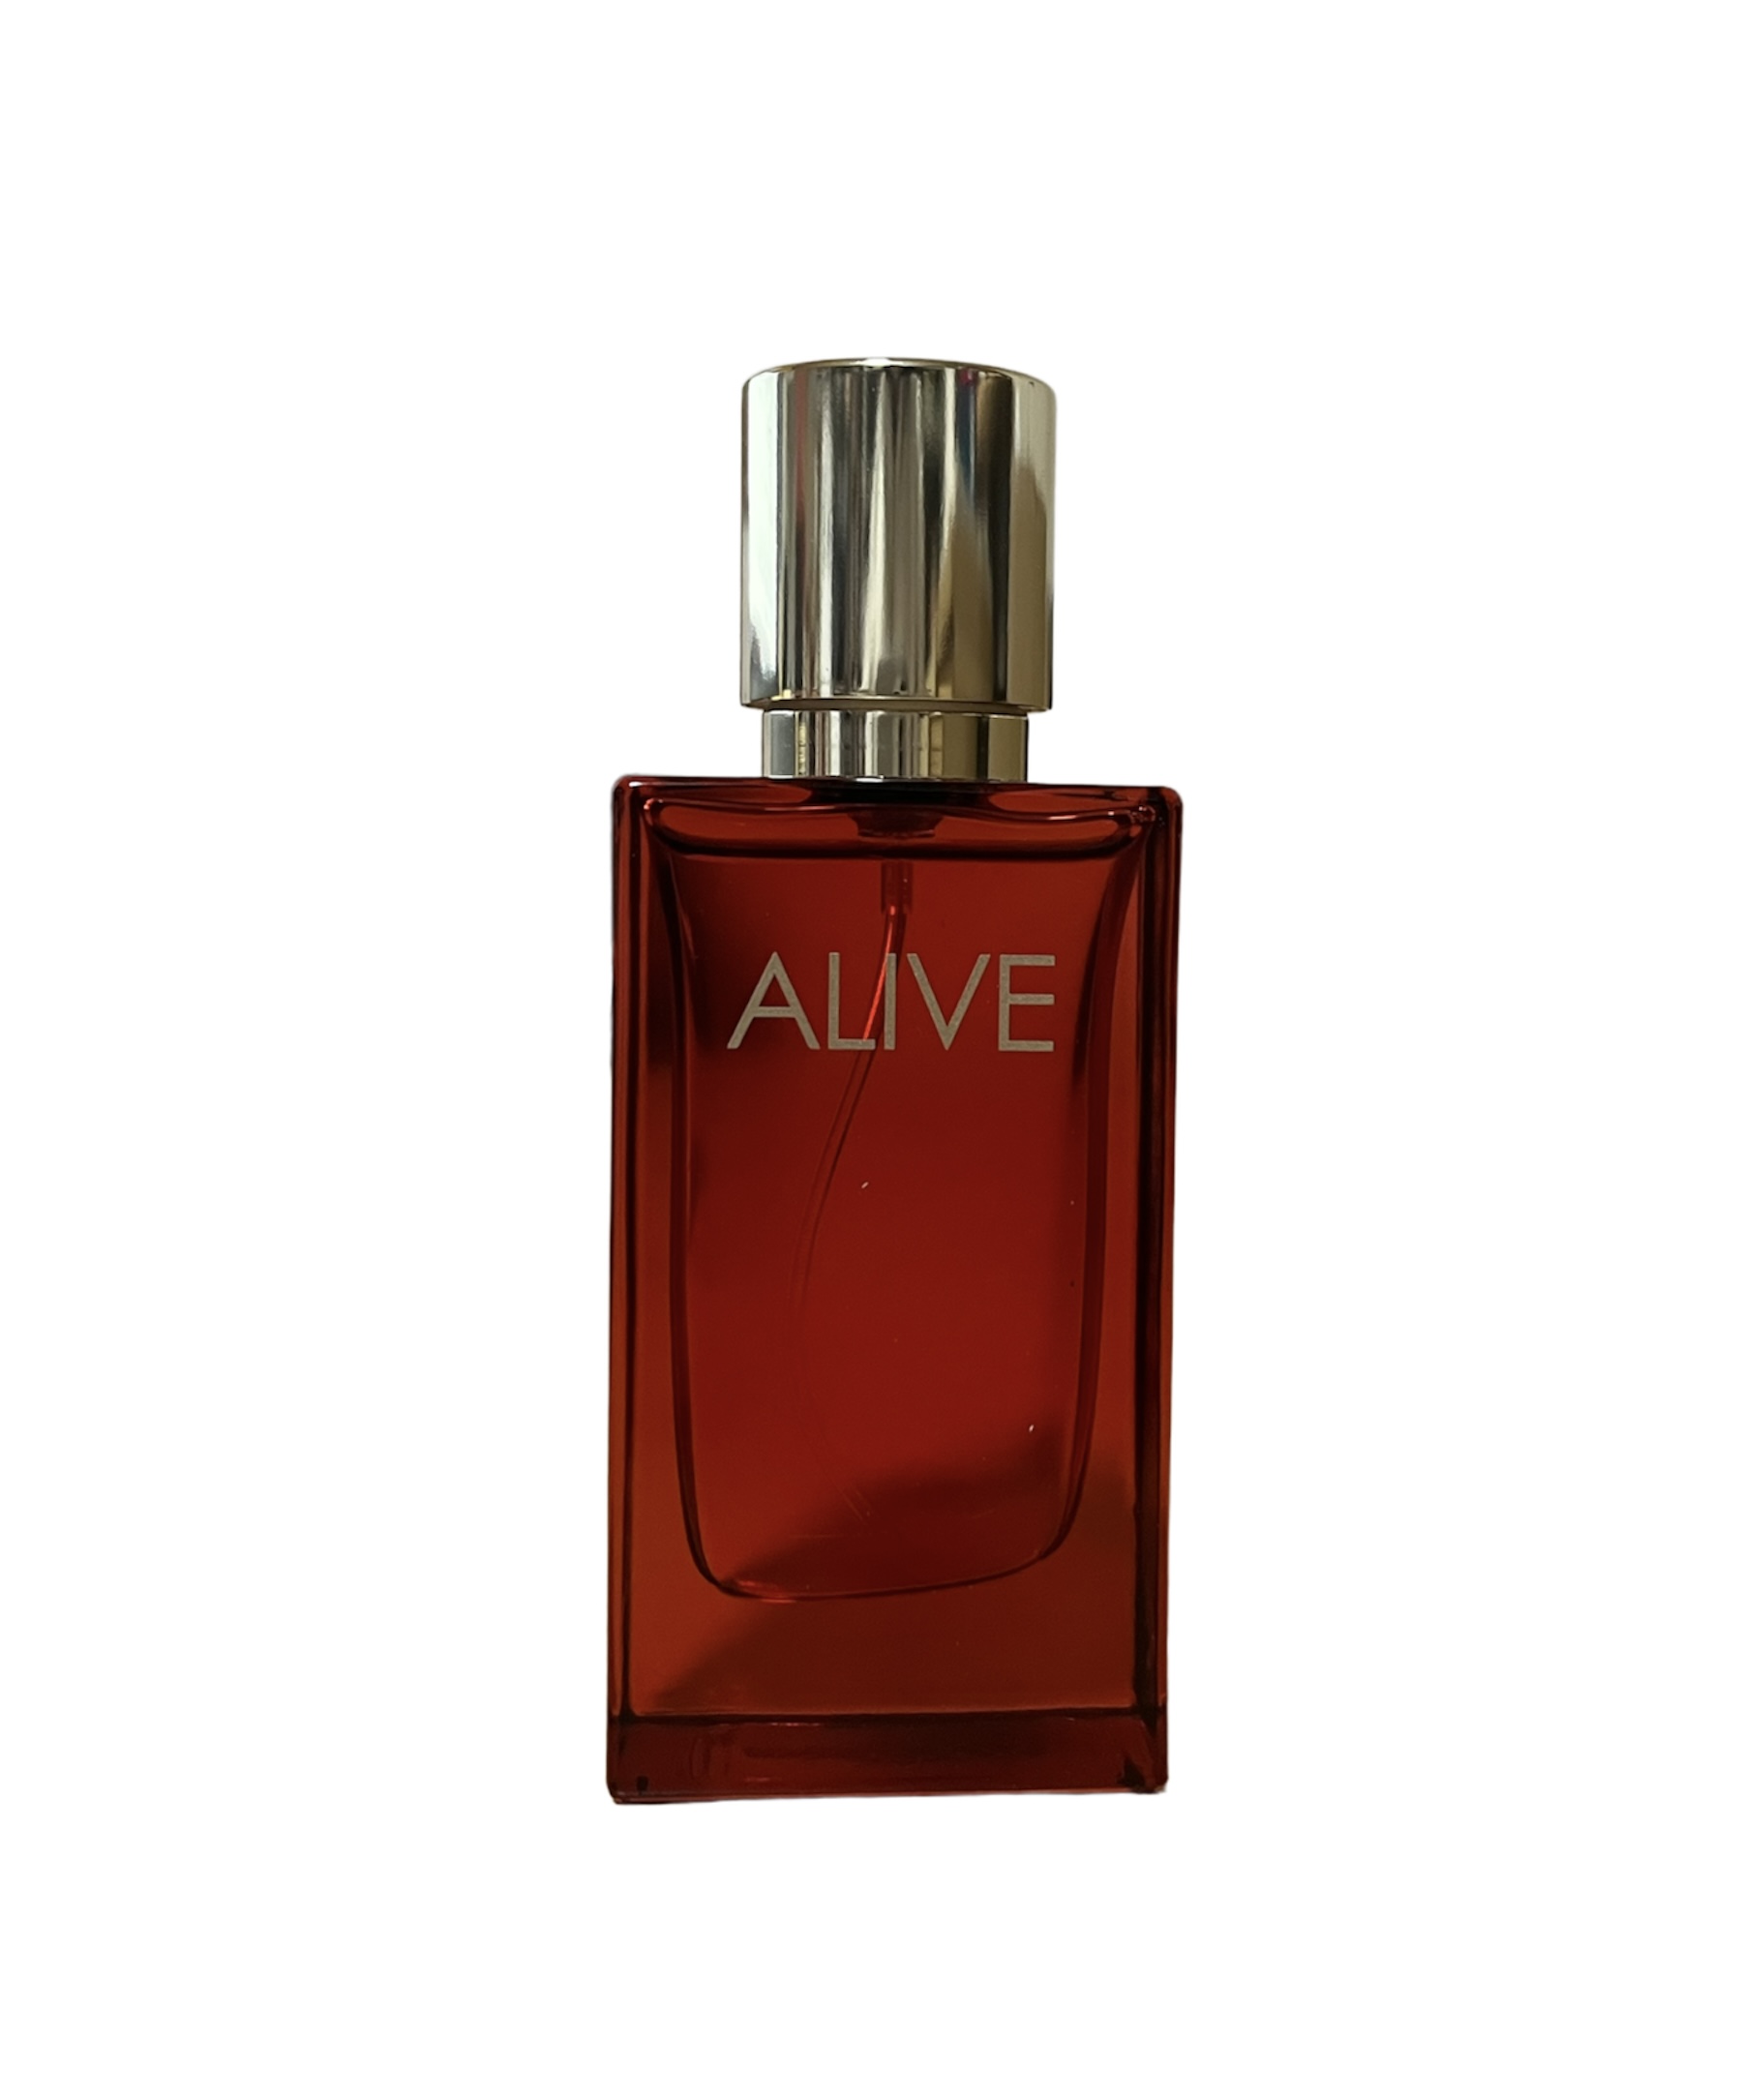 Boss - Alive Parfum